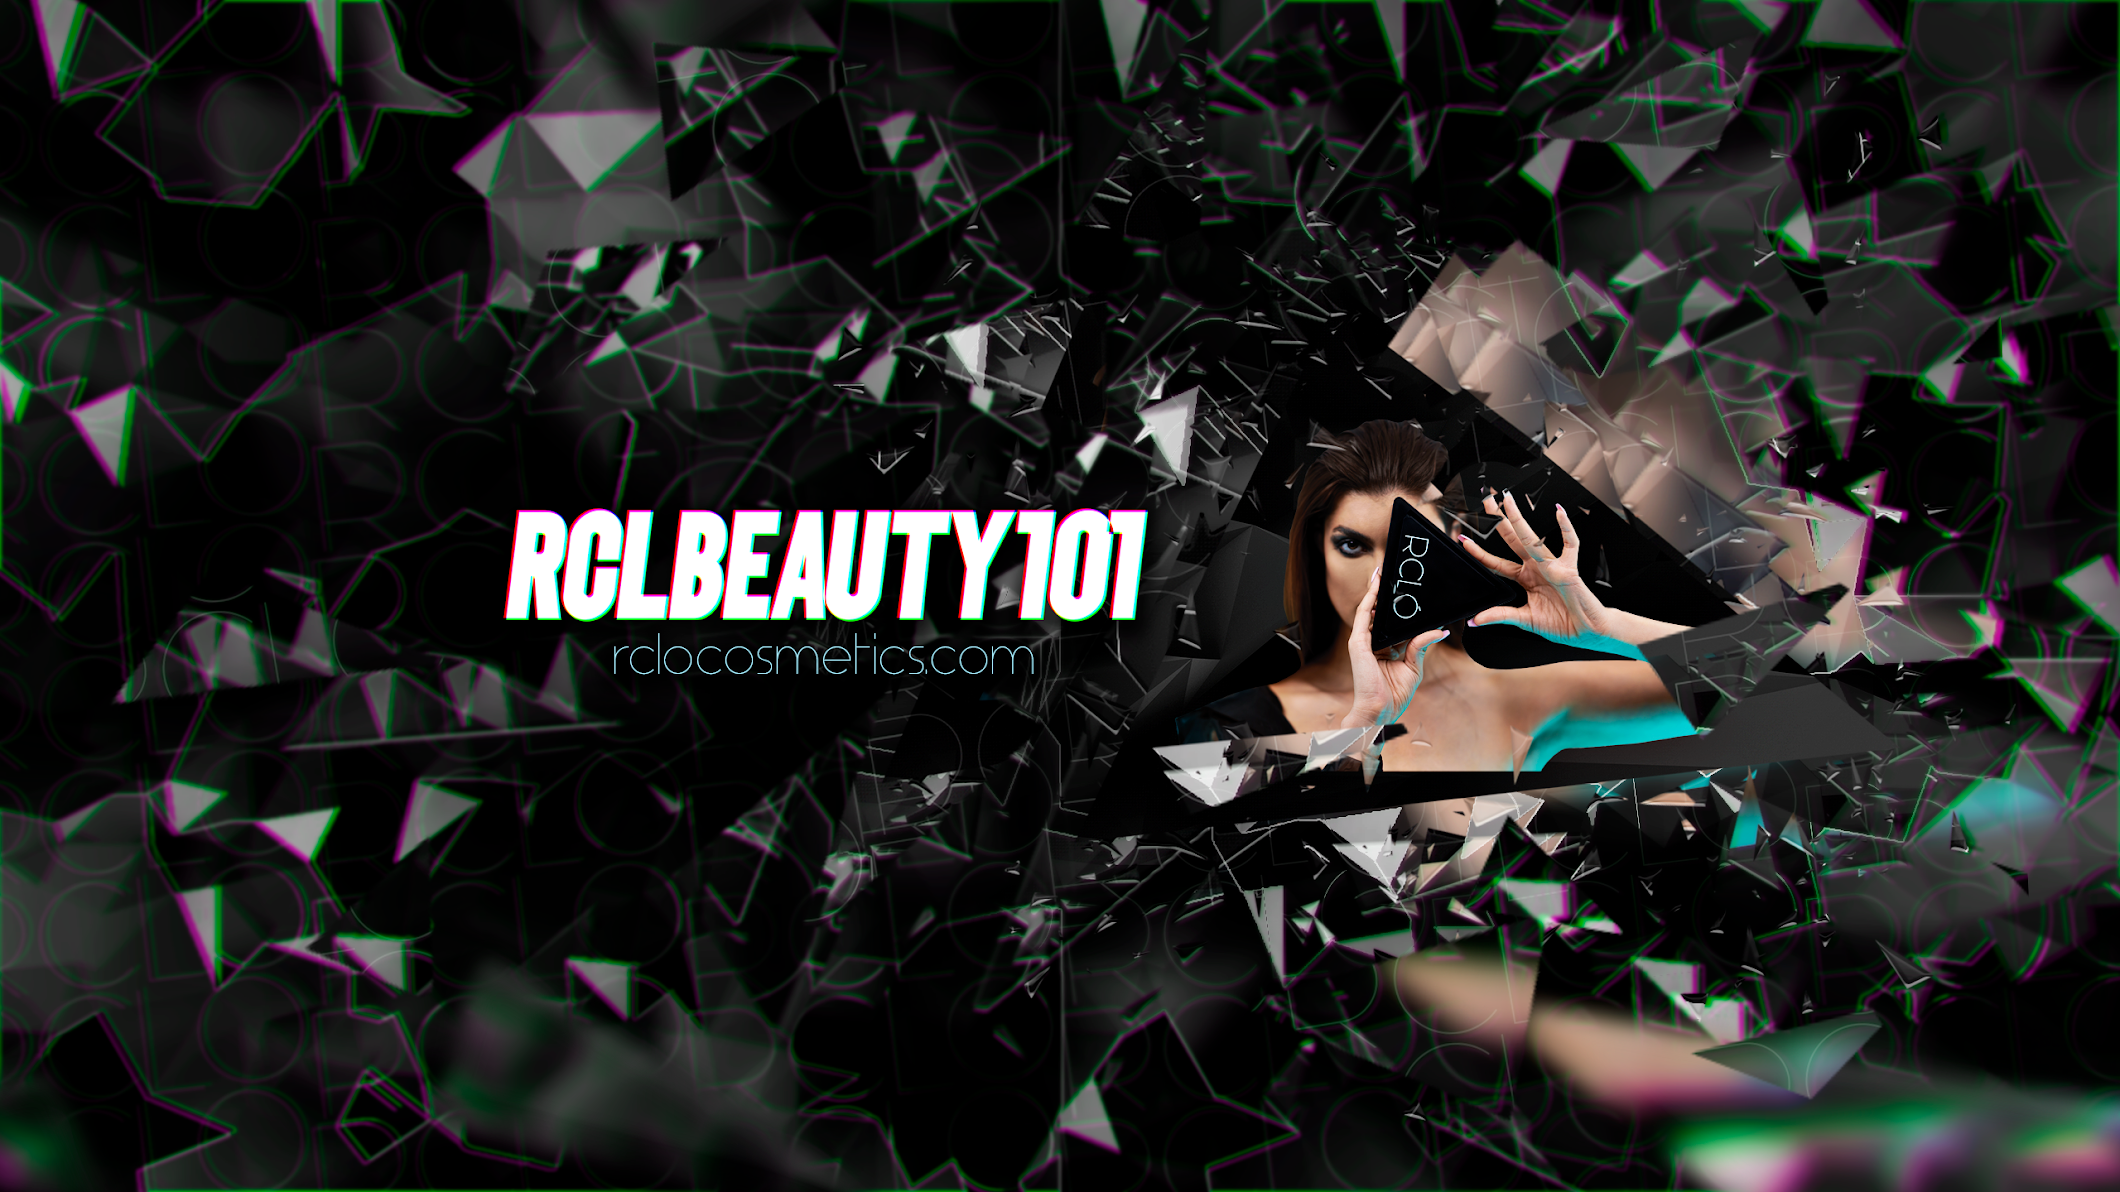 Rclbeauty101